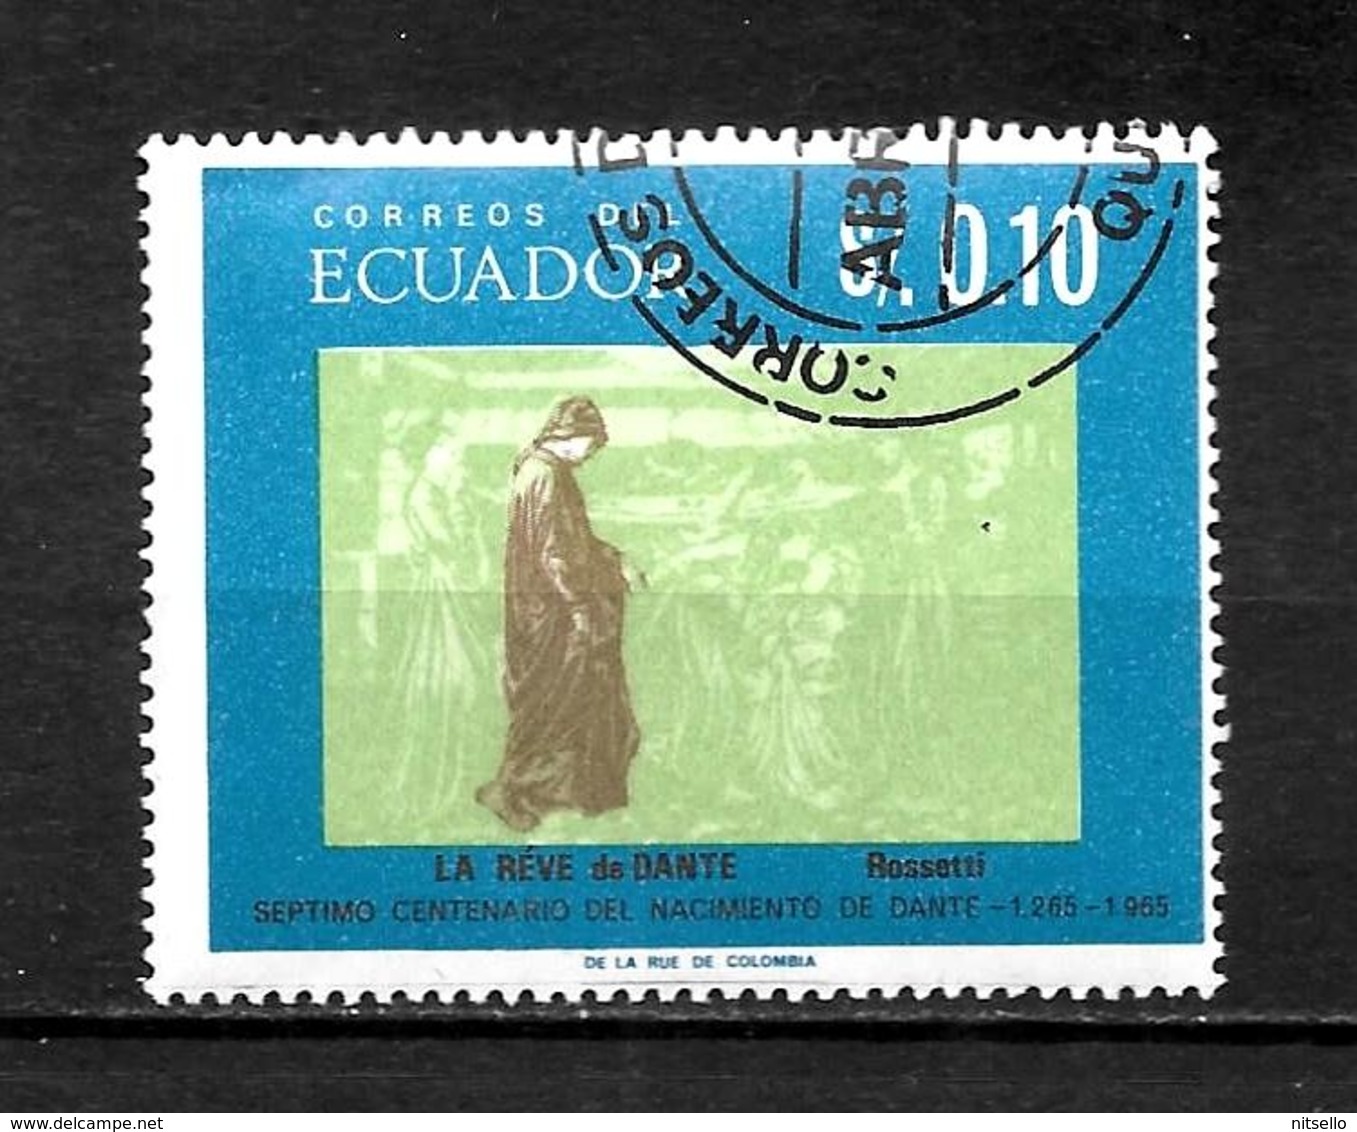 LOTE 1836 ///   ECUADOR   ¡¡¡ OFERTA - LIQUIDATION !!! JE LIQUIDE !!! - Ecuador